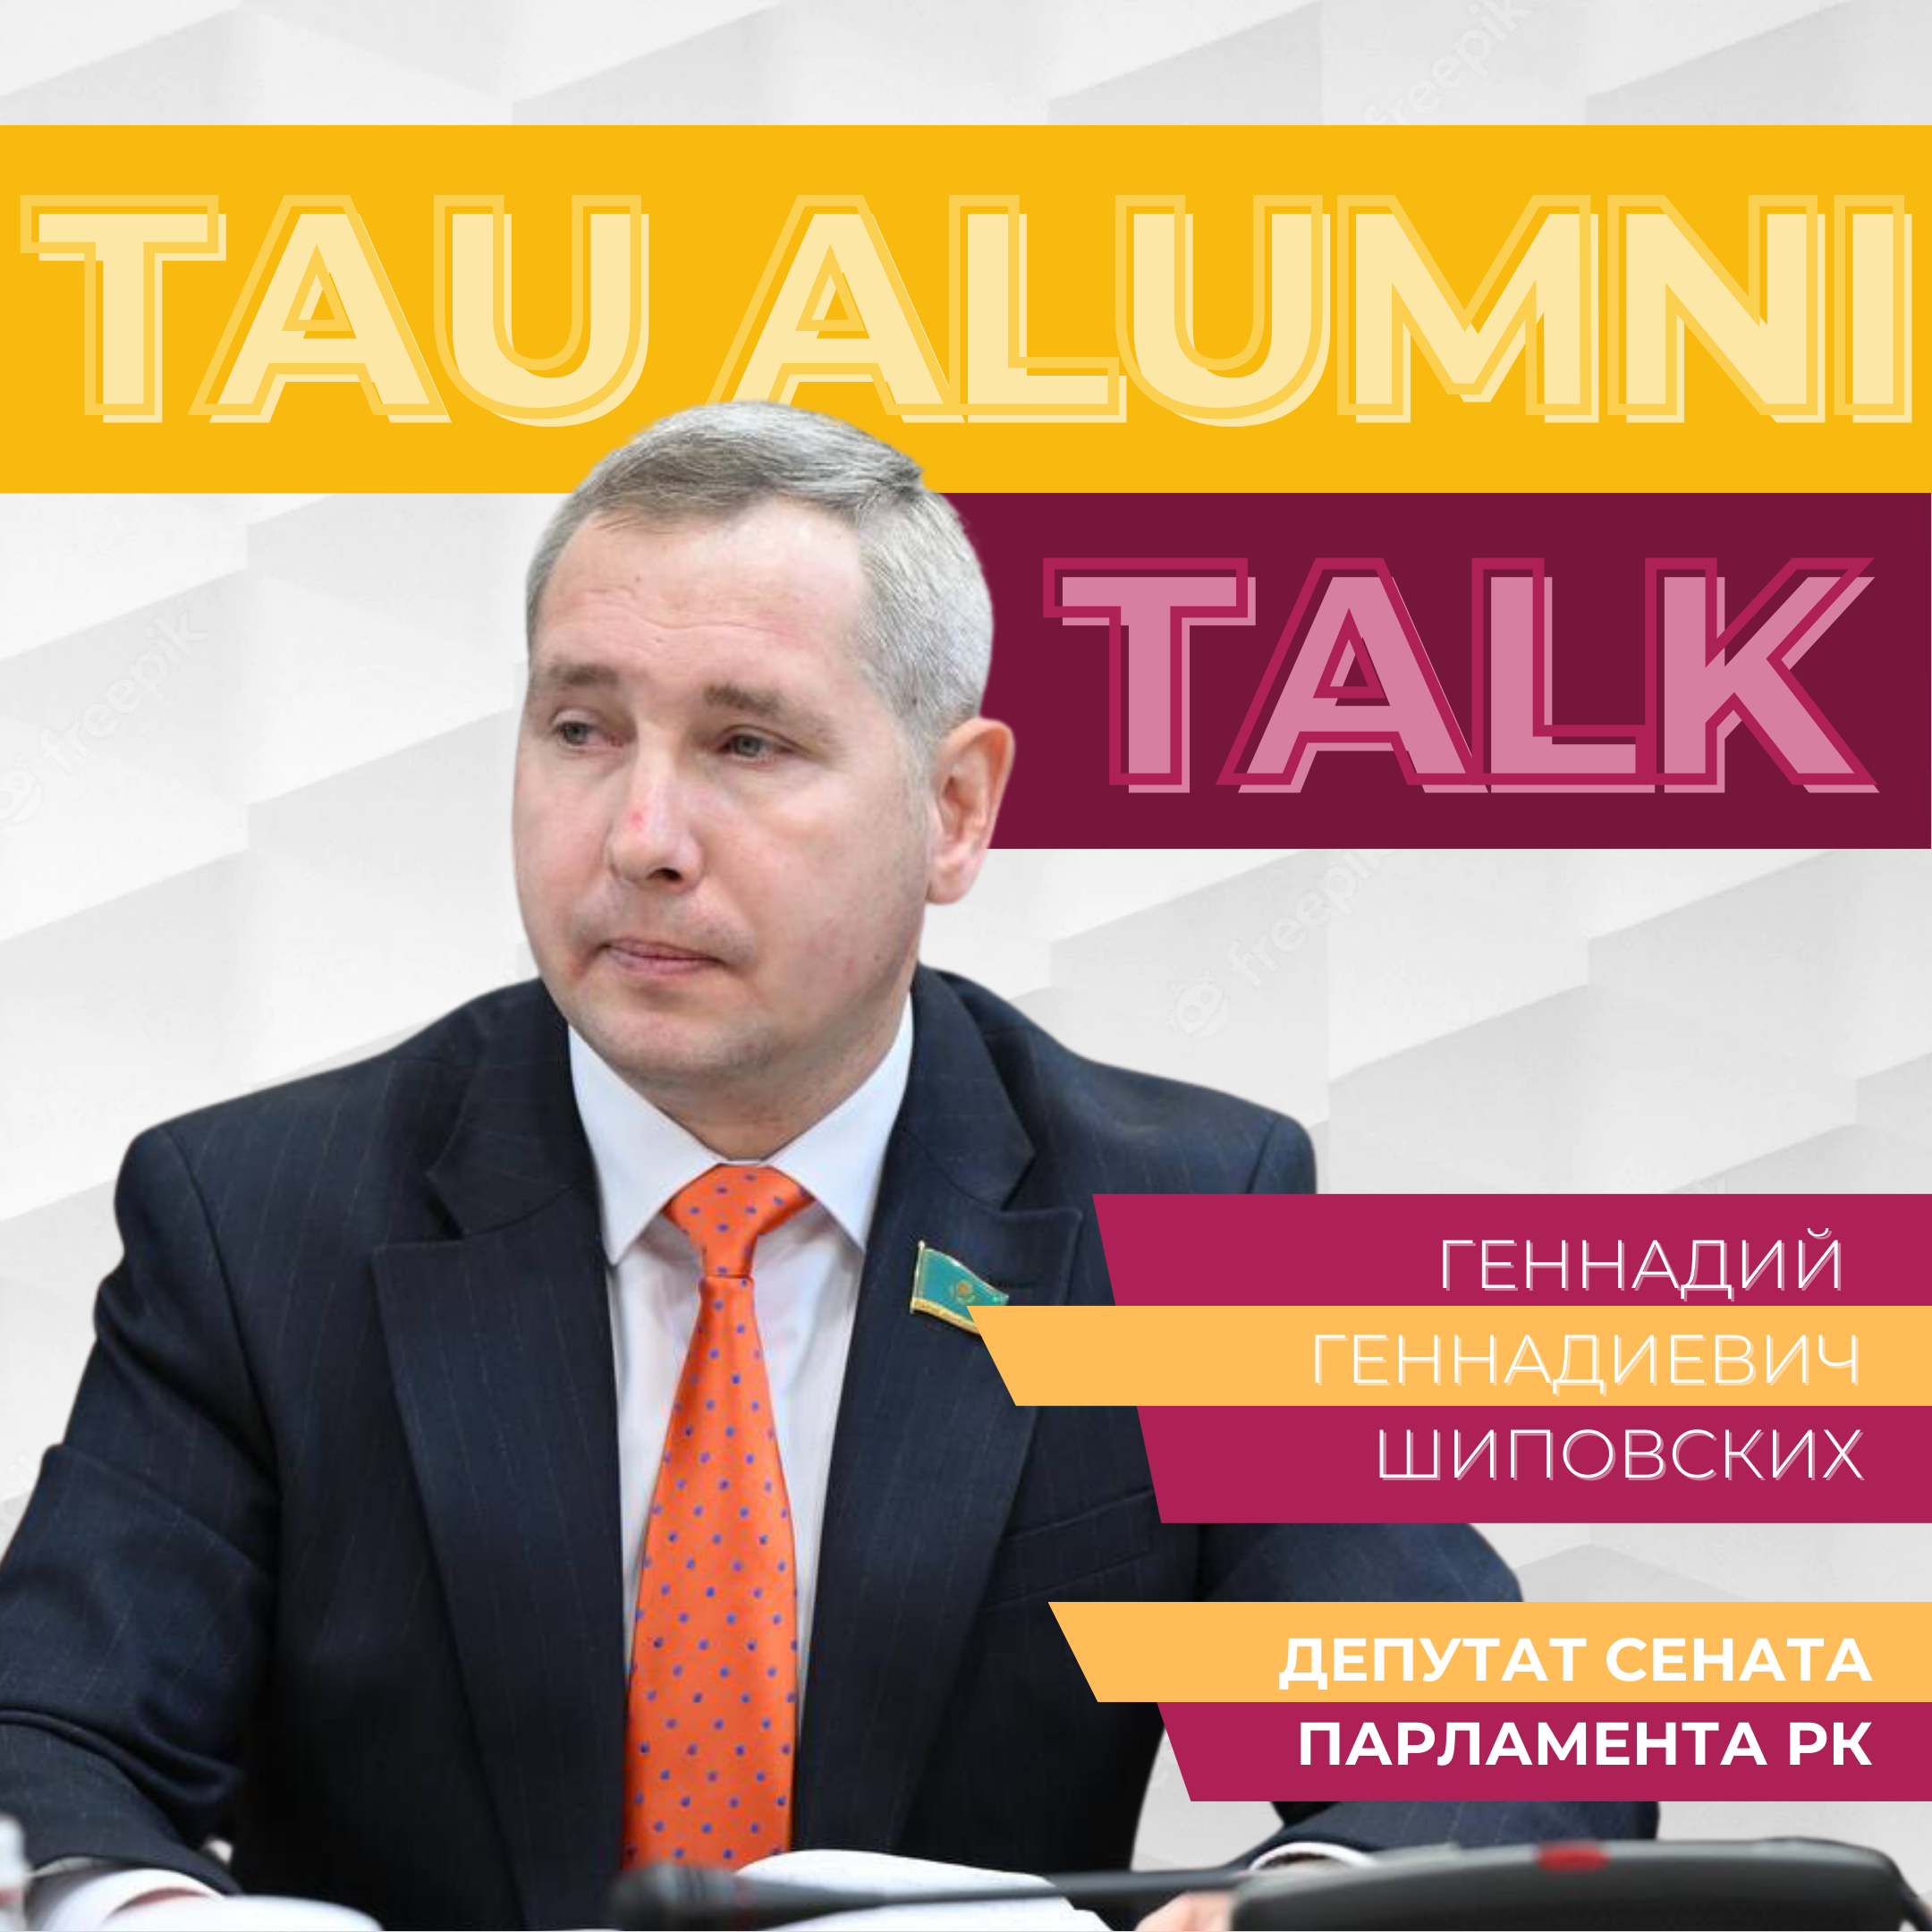 Alumni Talk with G.G. Shipovskikh